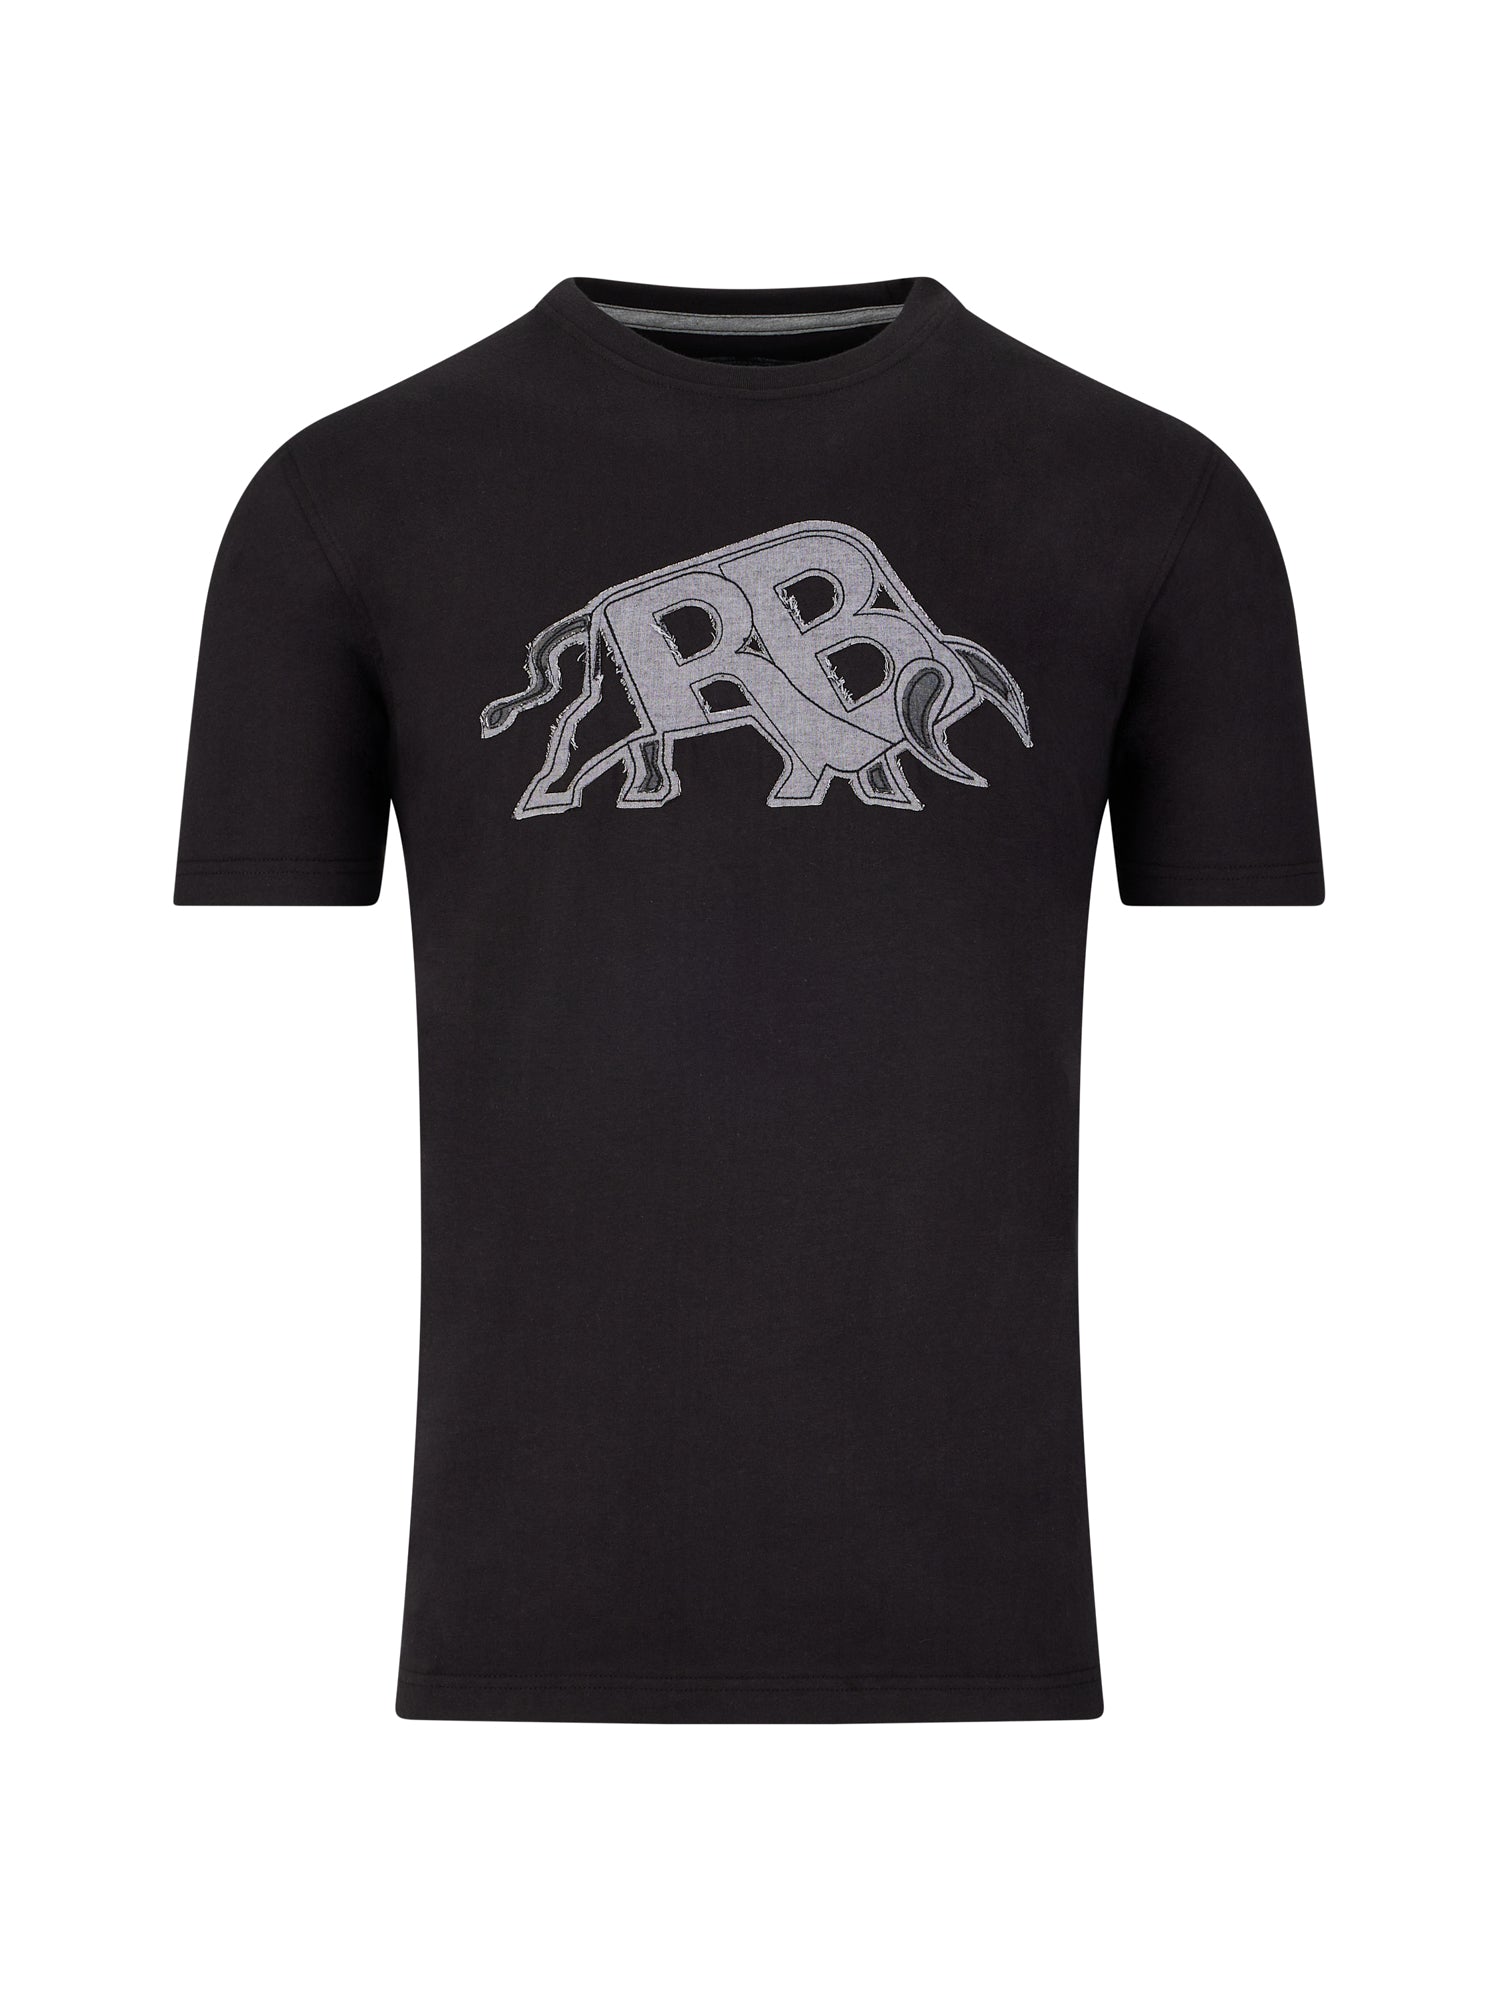 RB Applique Bull T-Shirt - Black